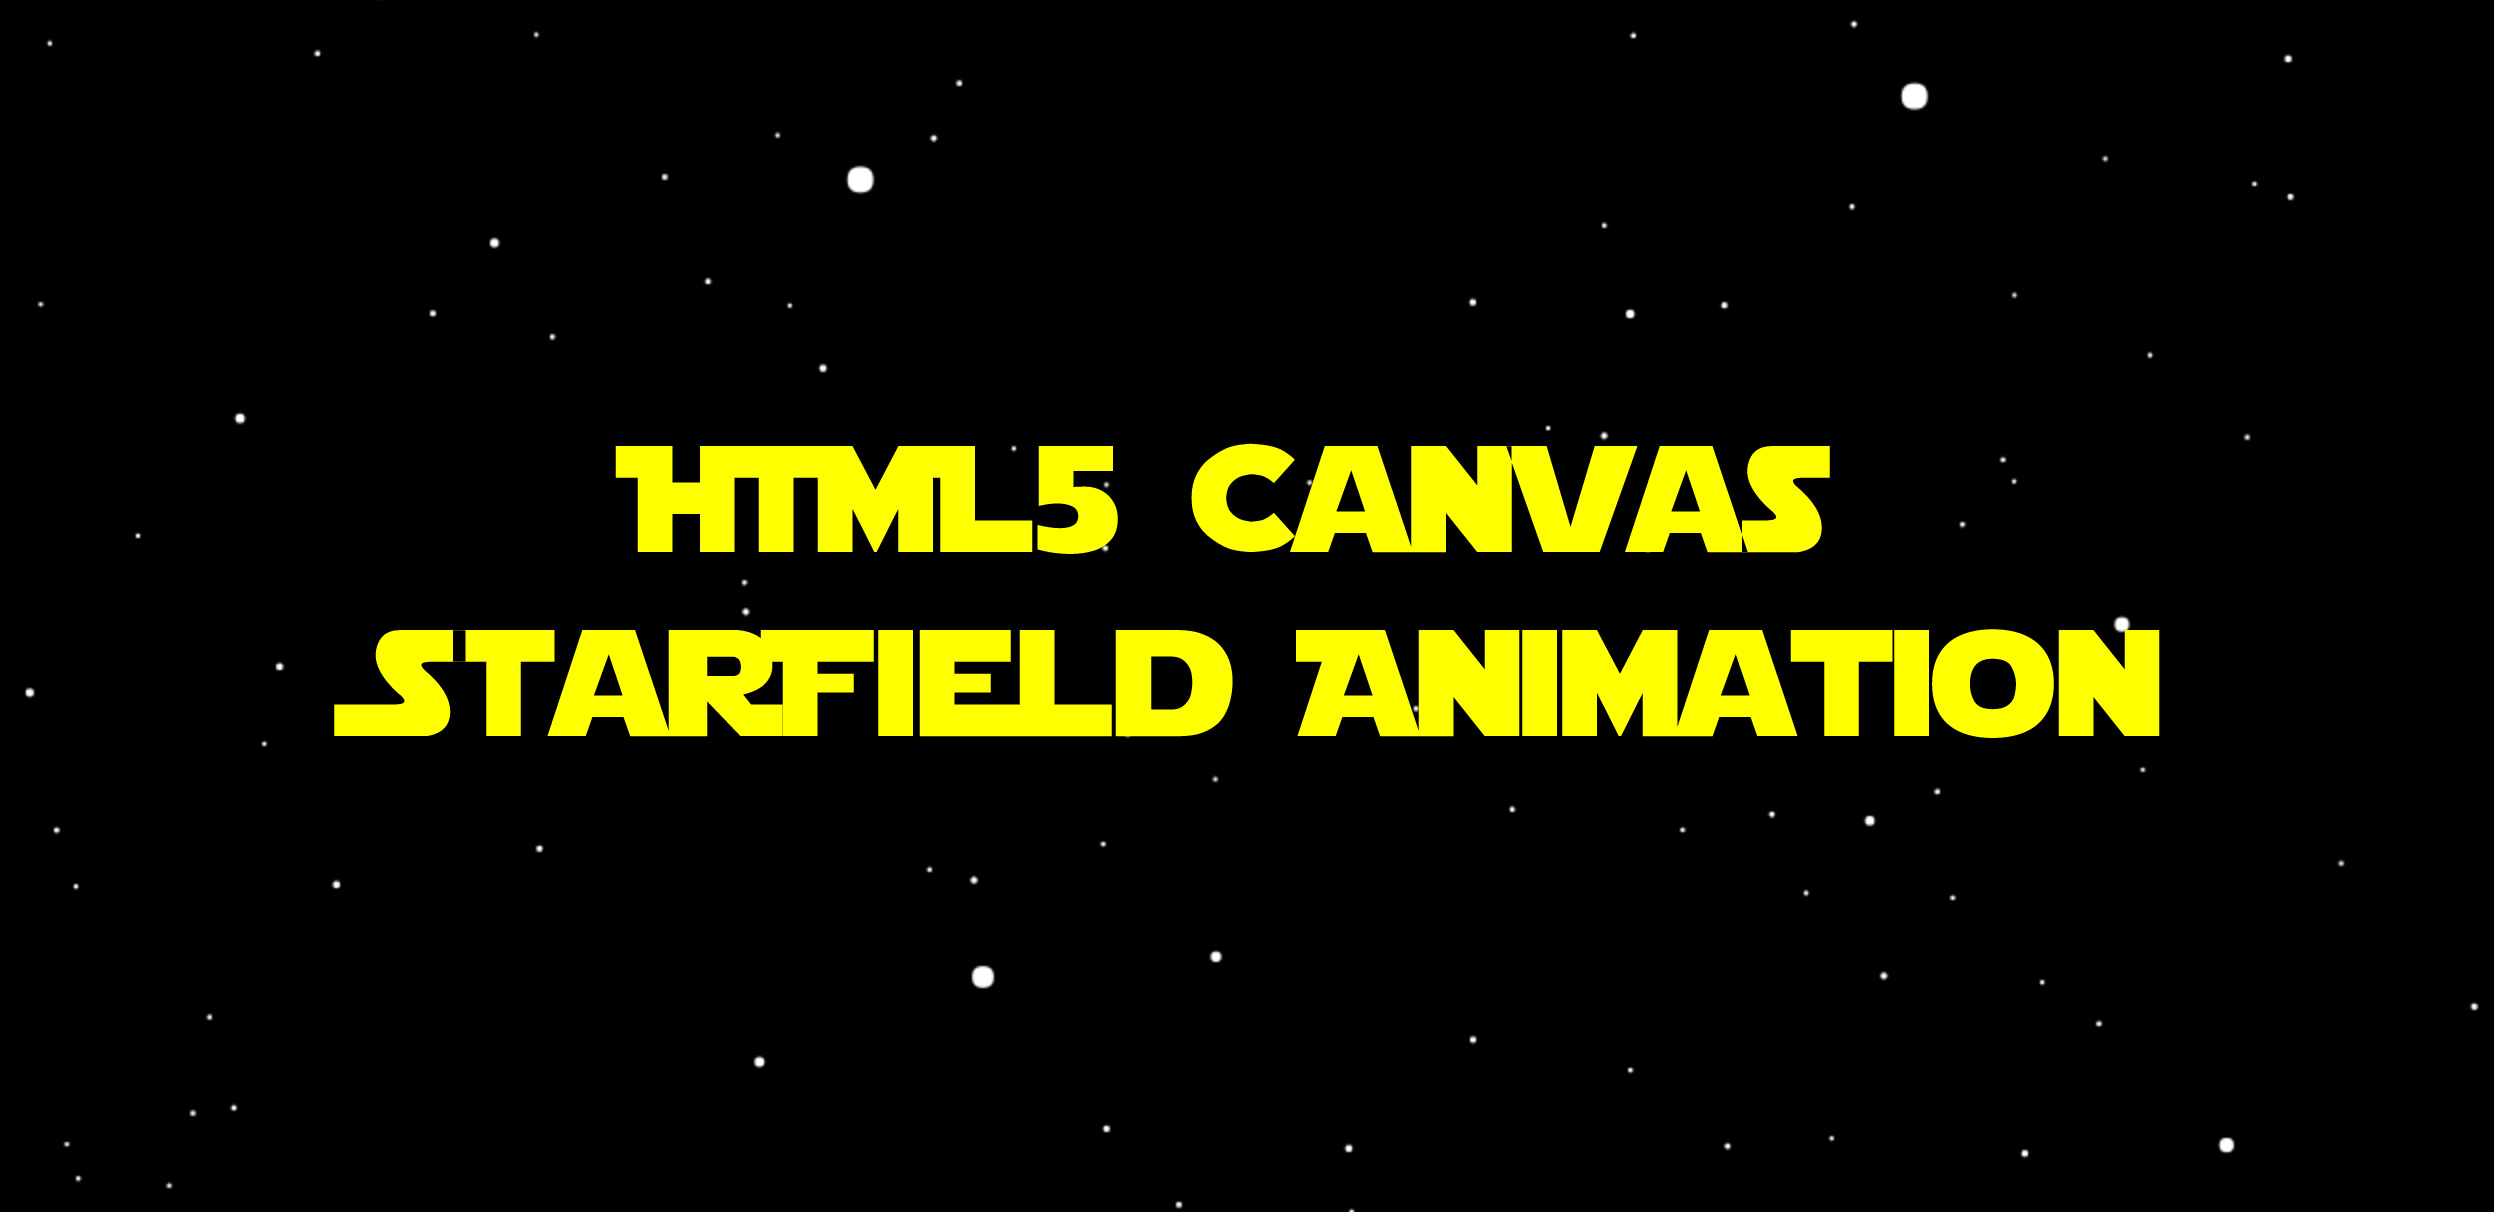 Starfield animation screenshot